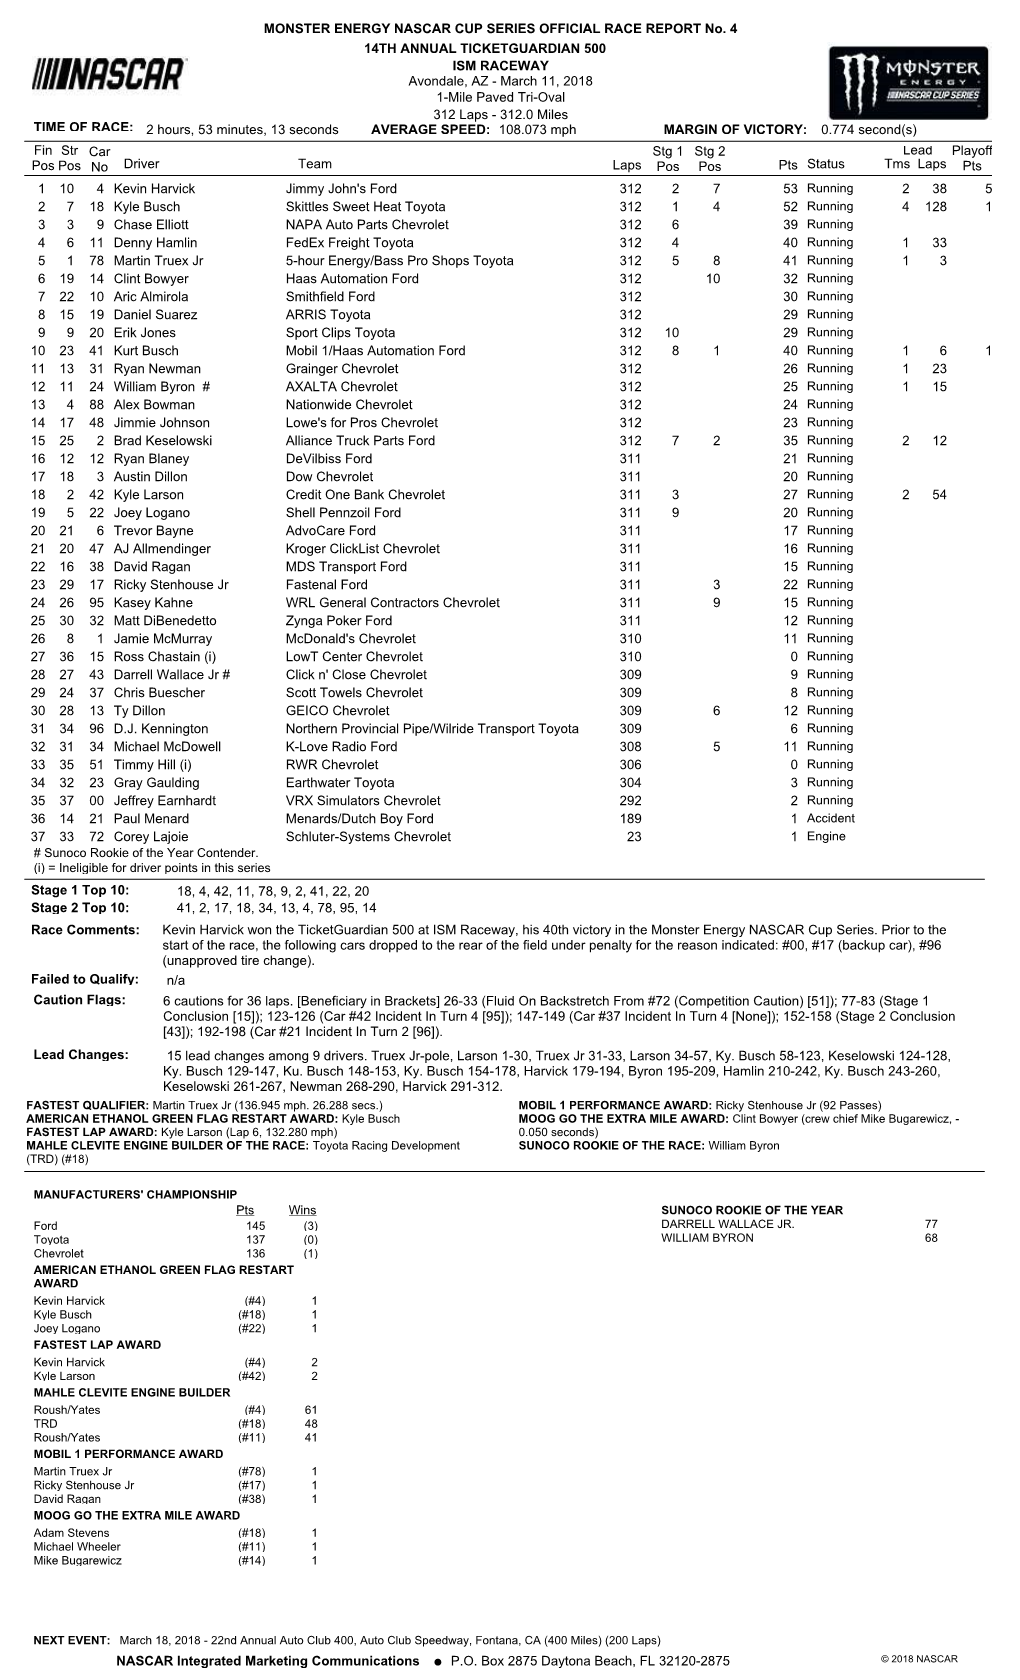 Official Race & Points Report (Pdf)